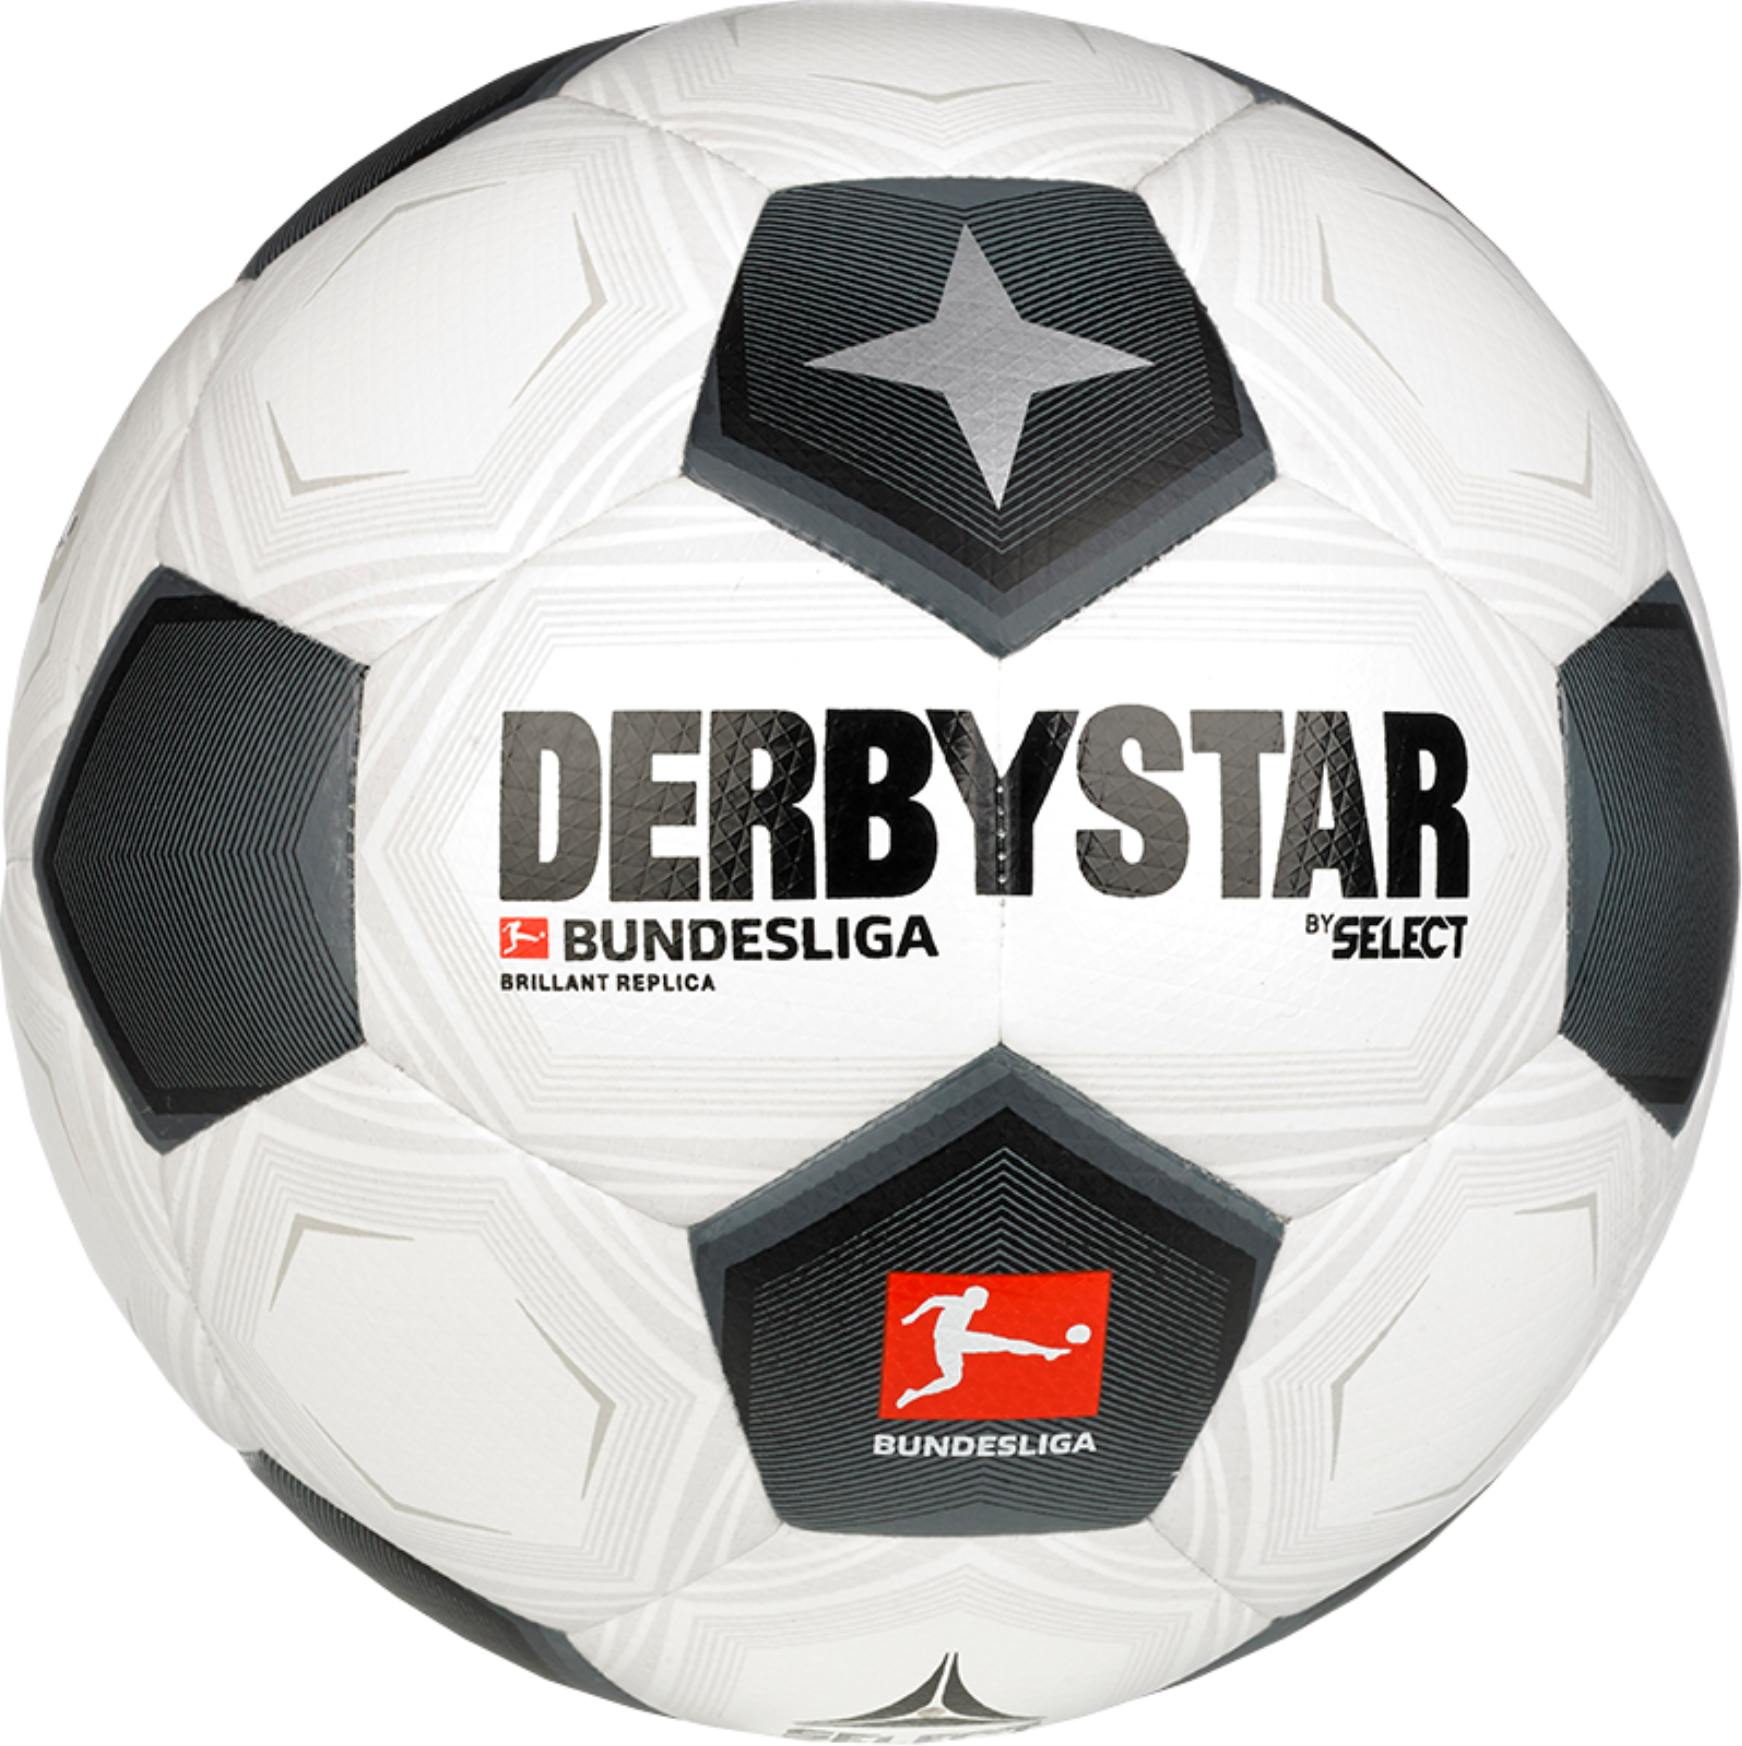 Piłka Derbystar Bundesliga Brillant Replica Classic v23